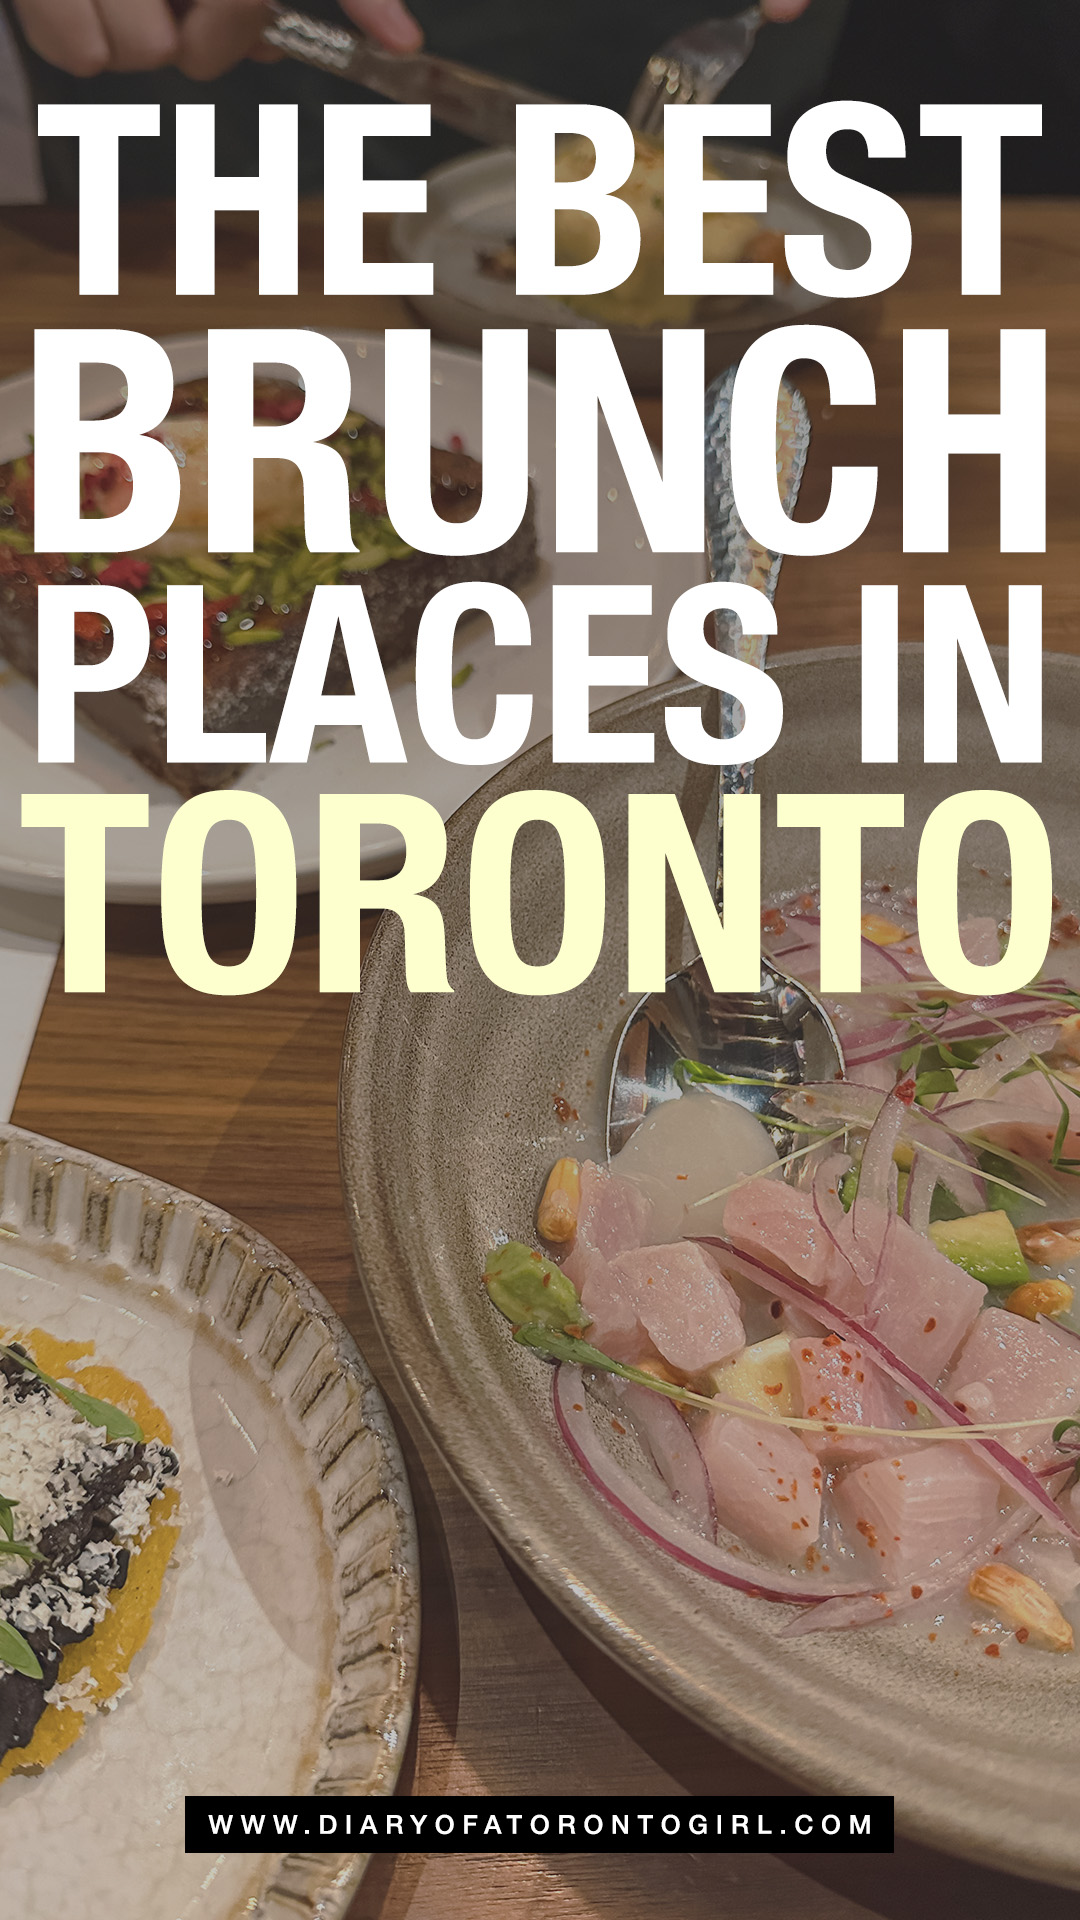 Best brunch places in Toronto